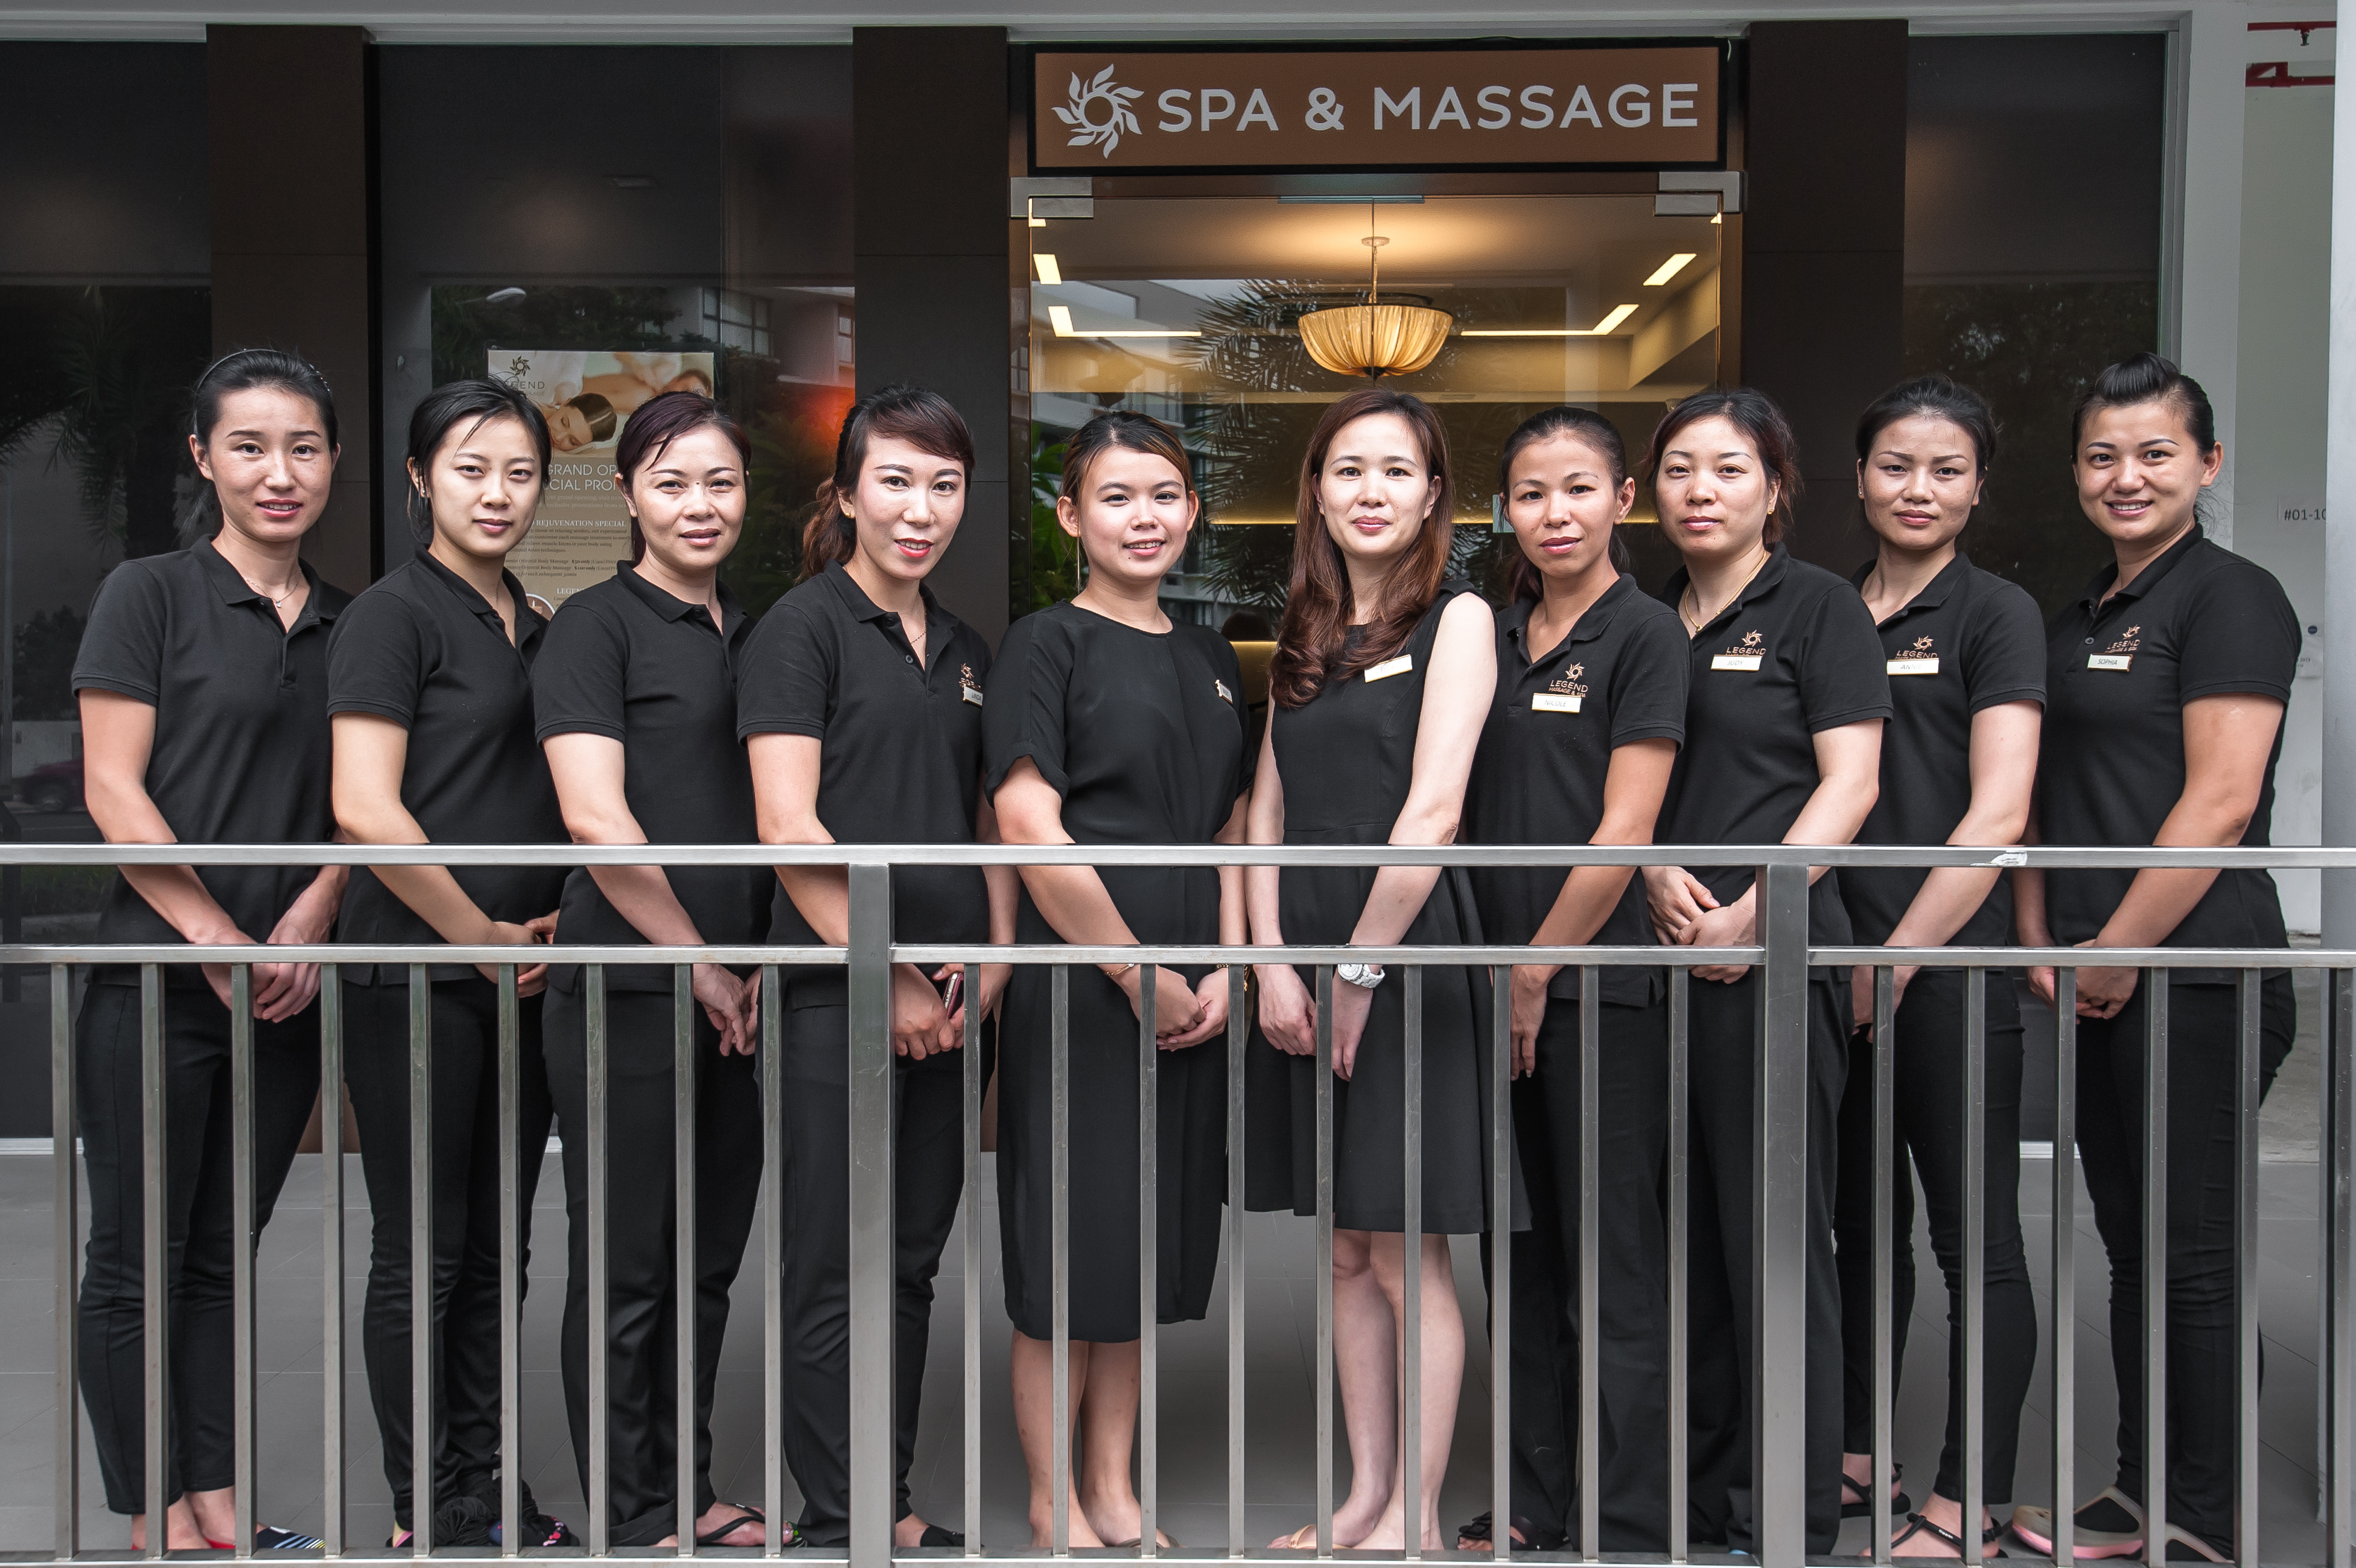 legend spa and massage staff